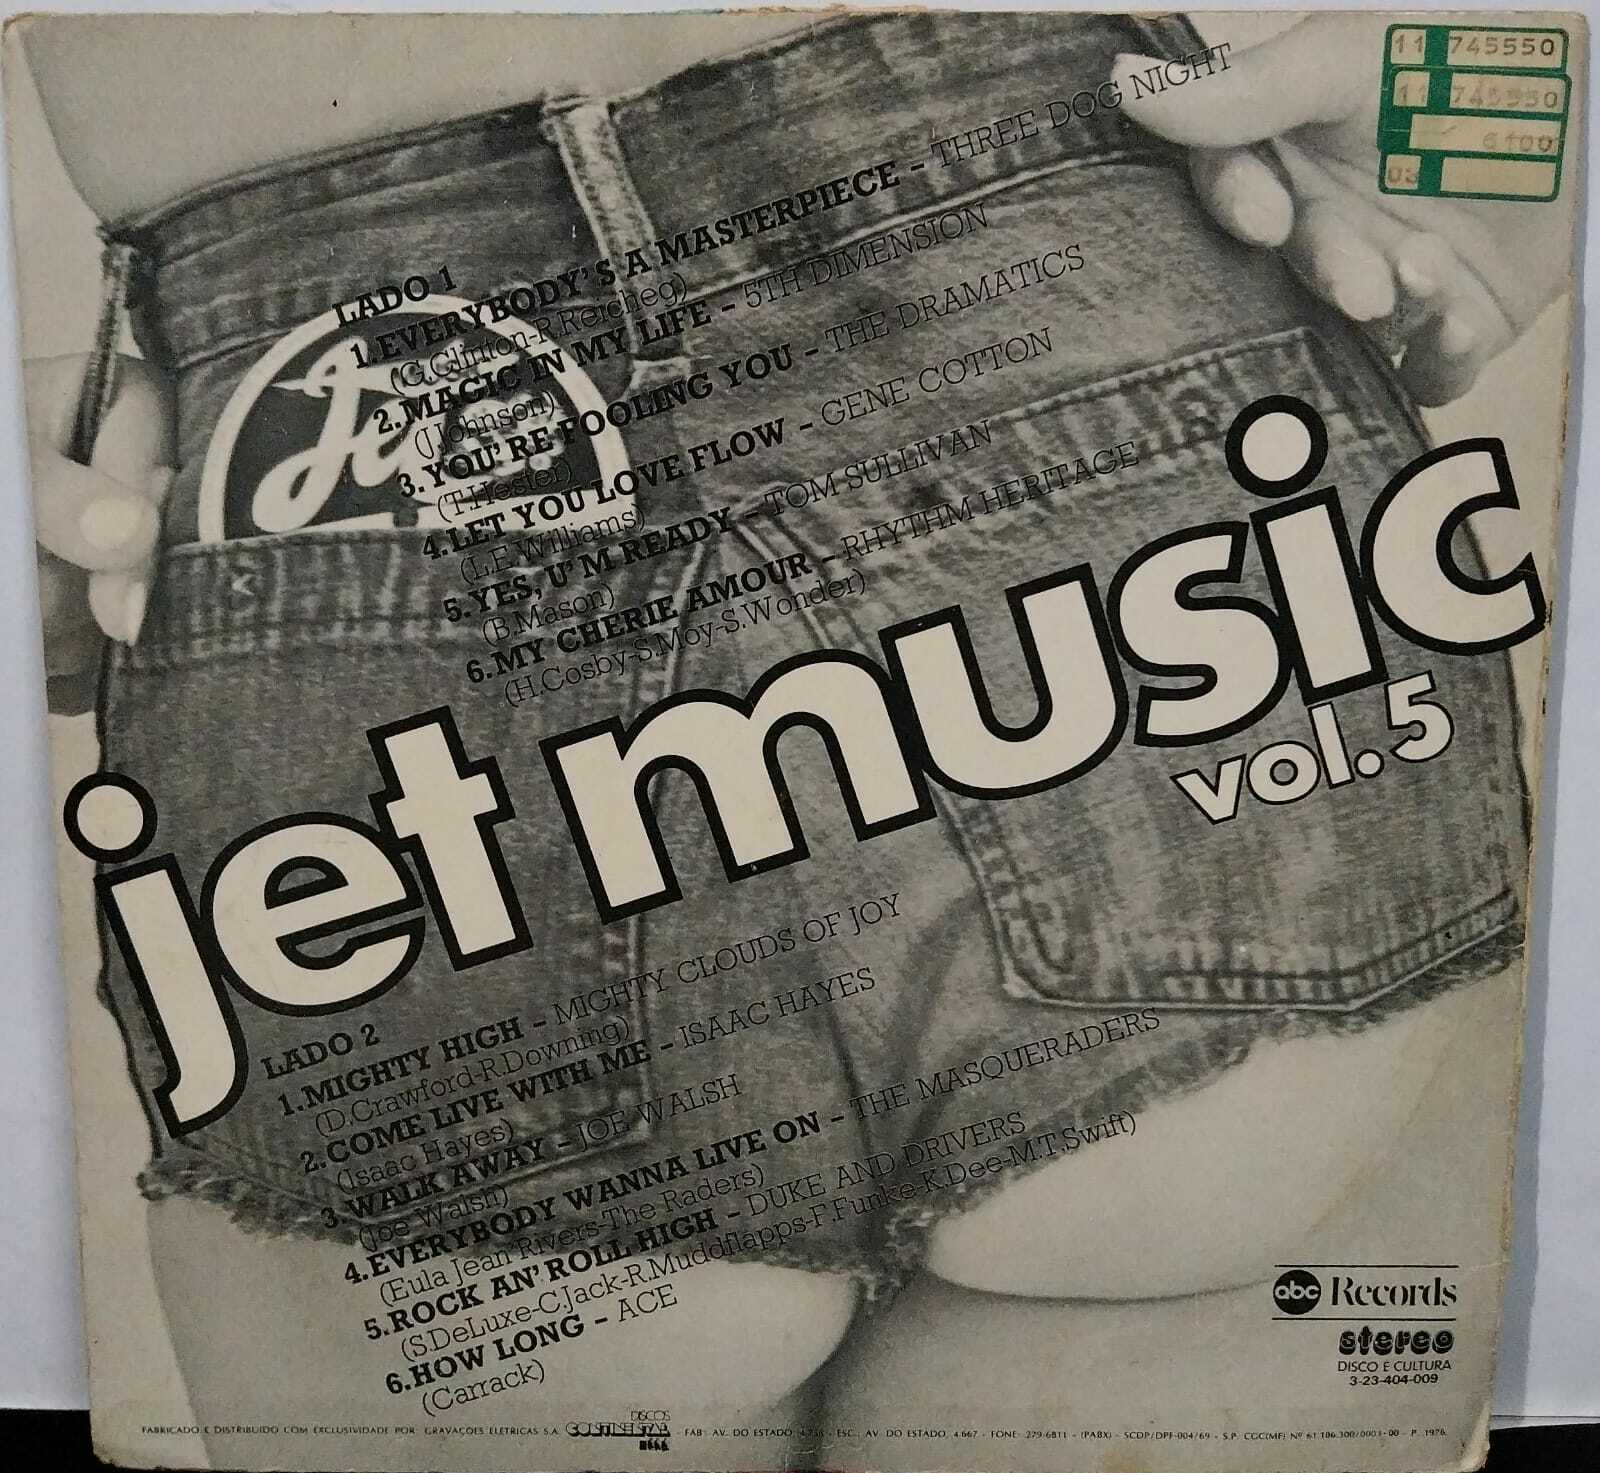 Vinil - Jet Music Vol 5